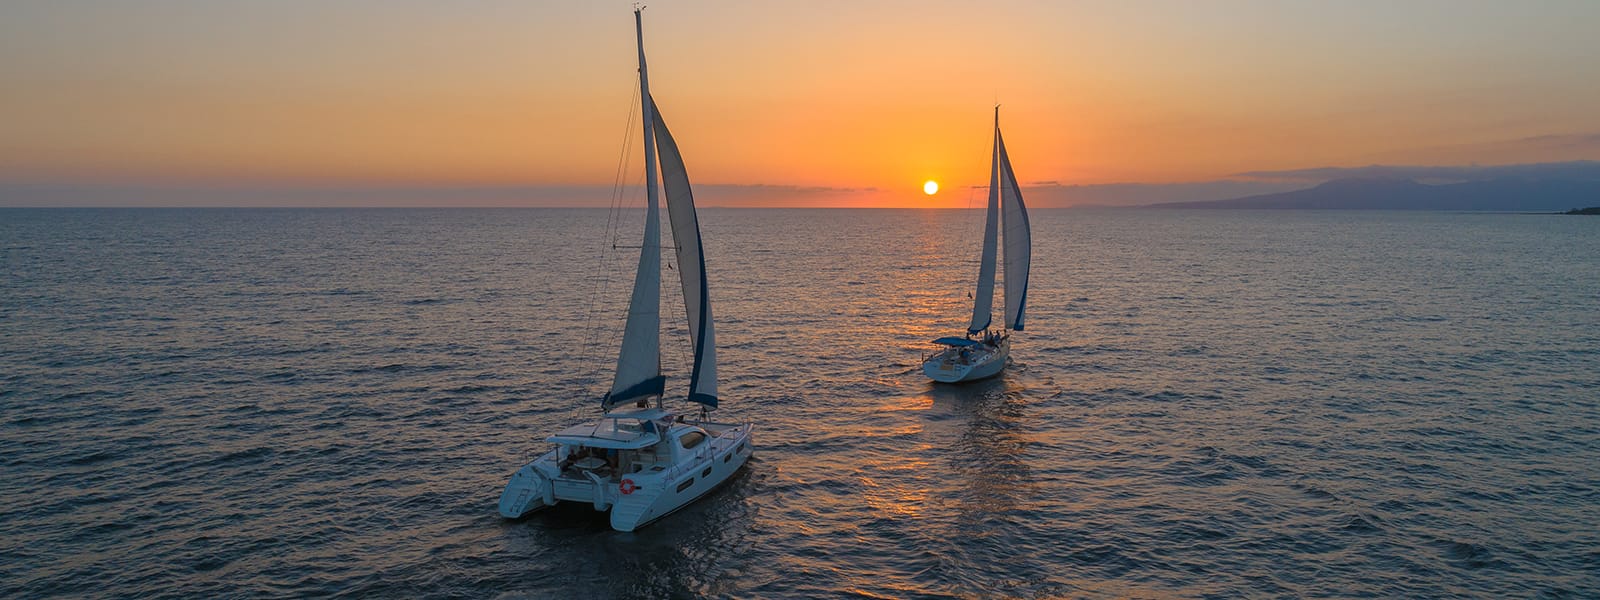 enjoy Punta Mita sunset from a sailing boat